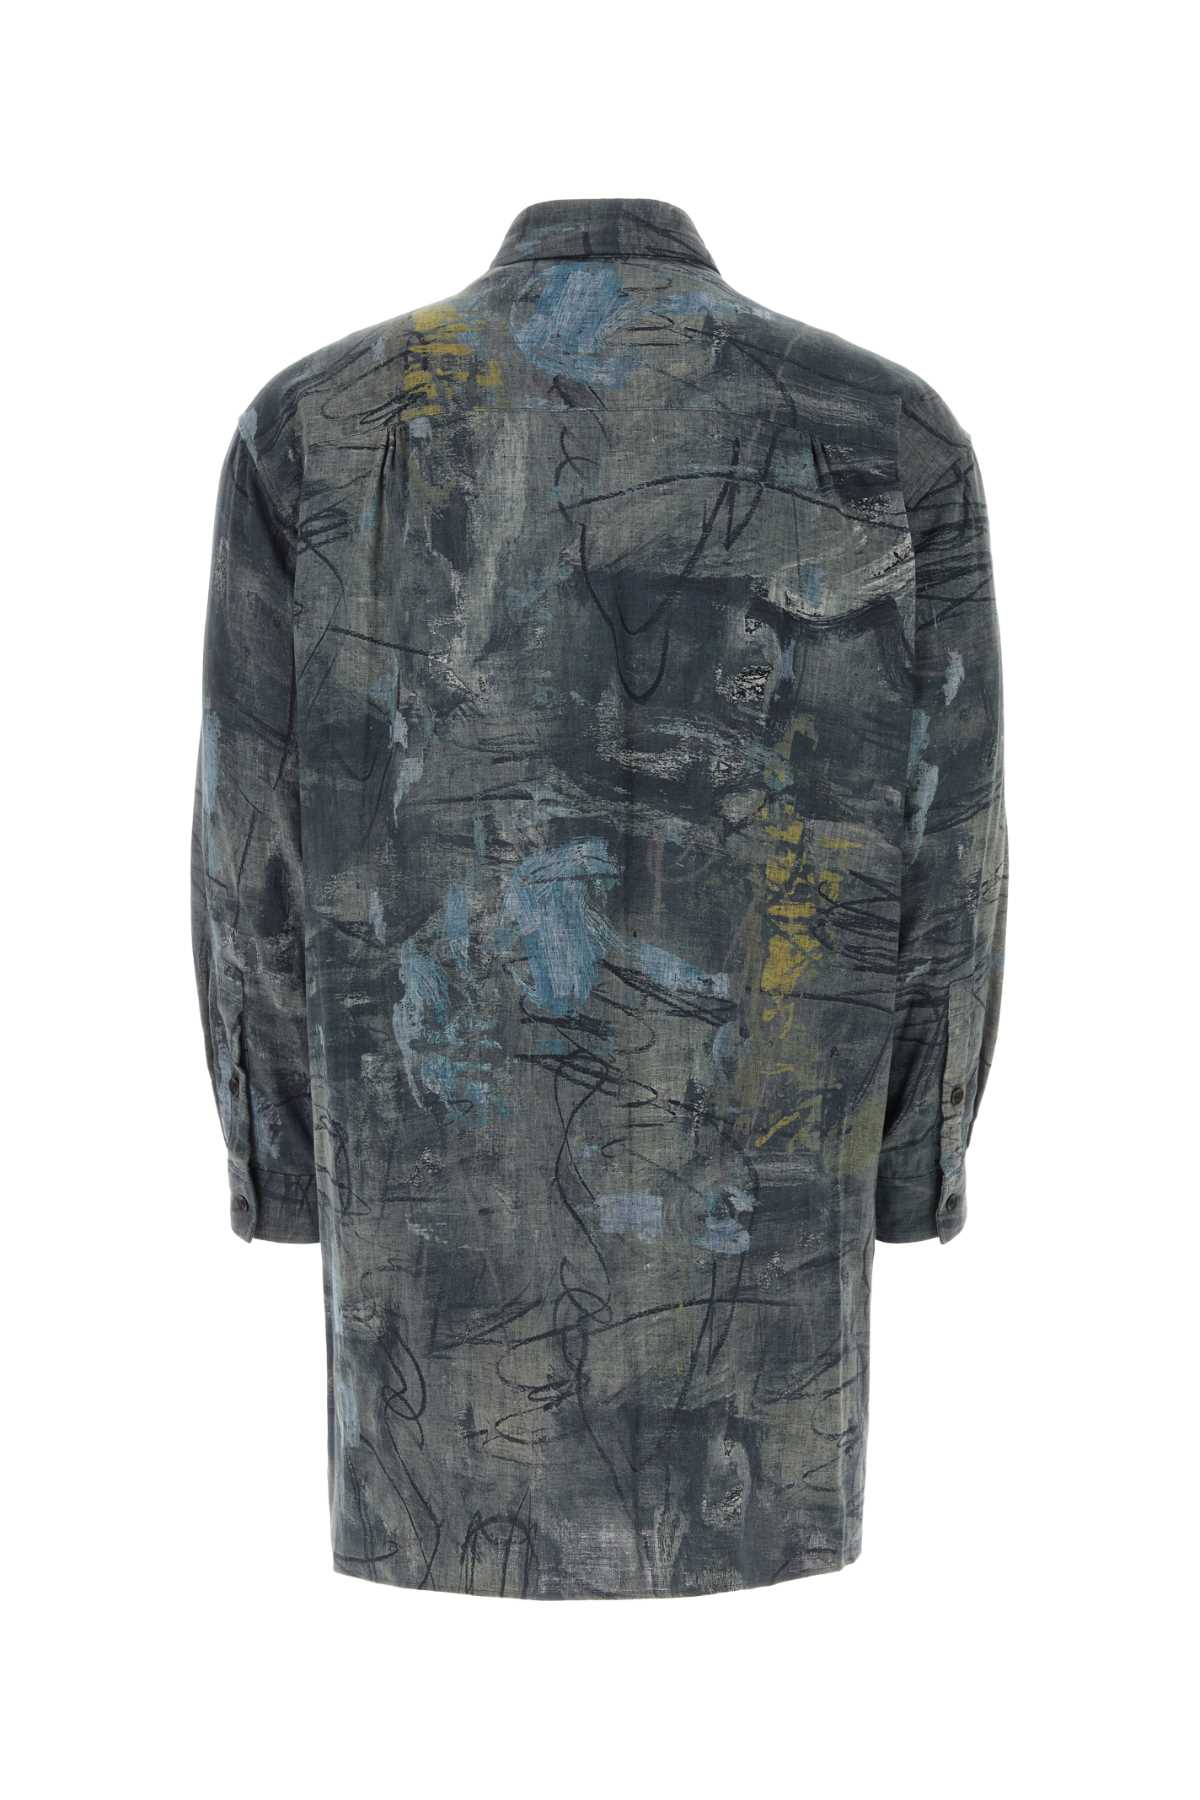 Yohji Yamamoto Printed Cotton Shirt In Grey